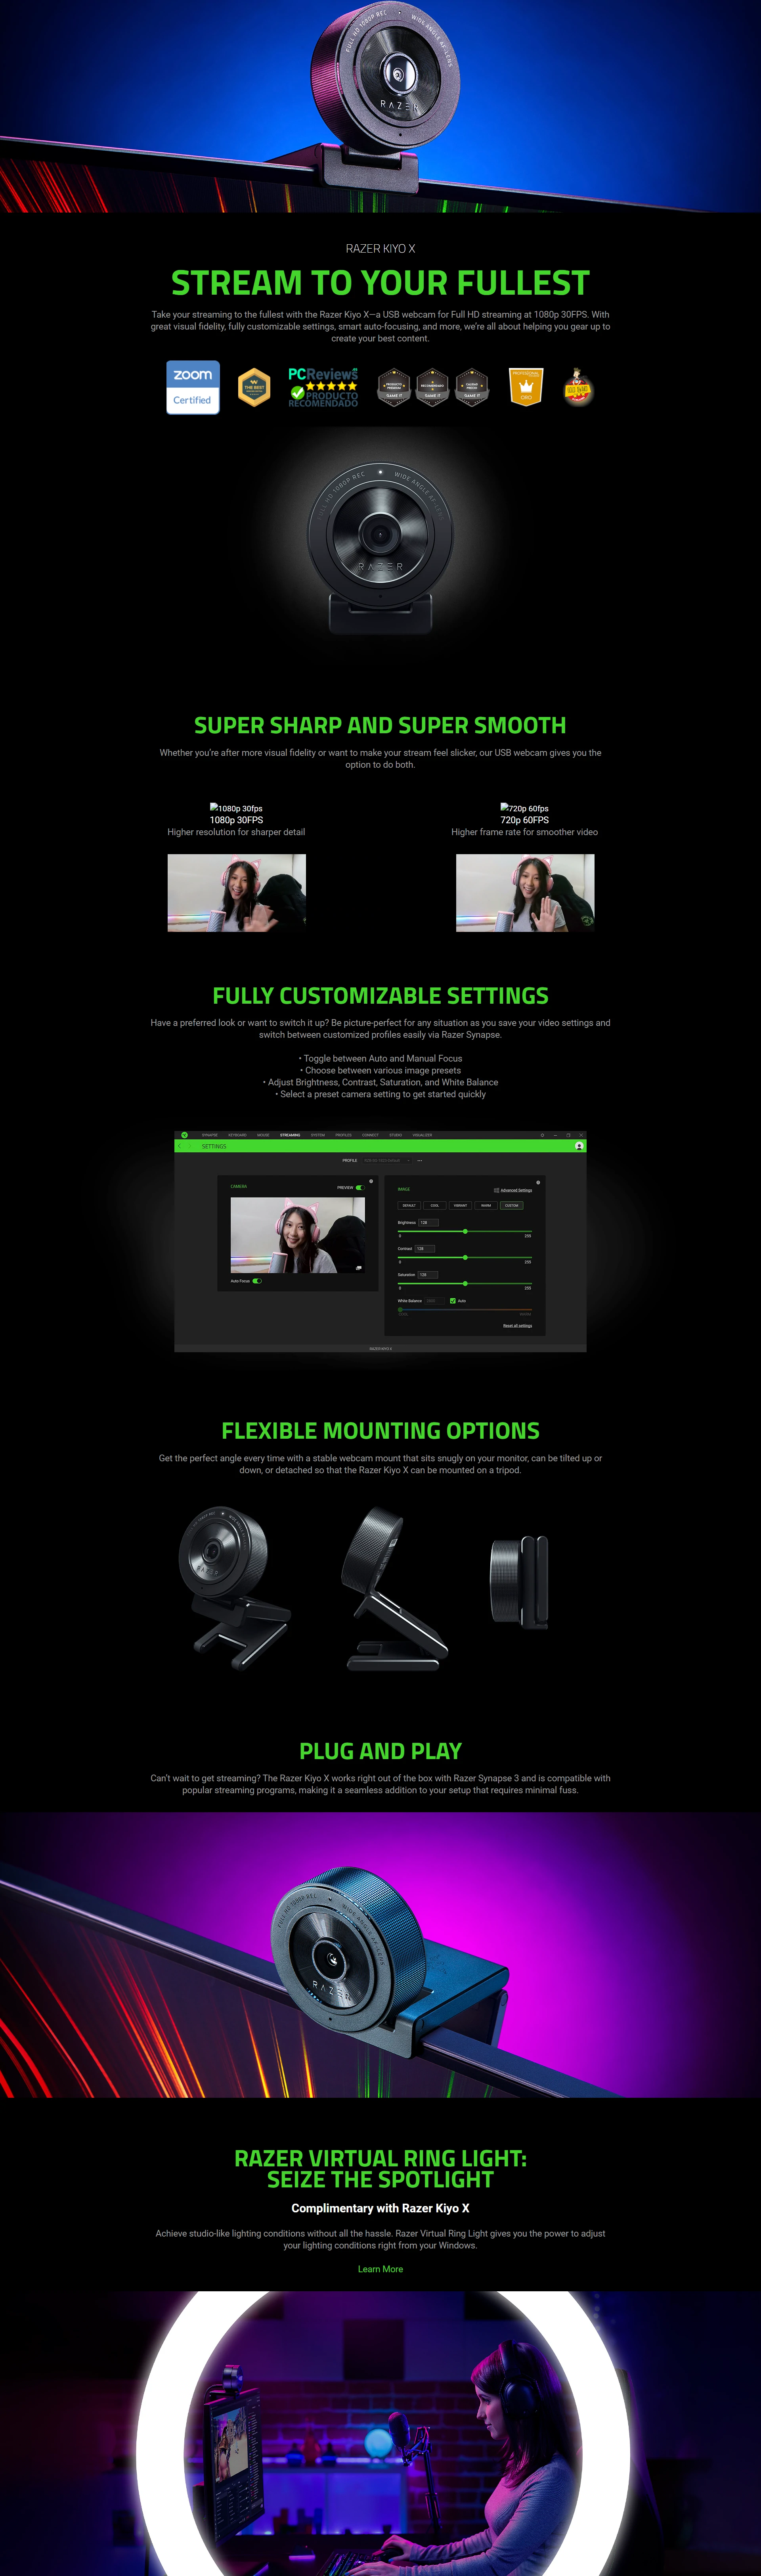 Overview - Razer - Kiyo X - Full HD USB Streaming Webcam